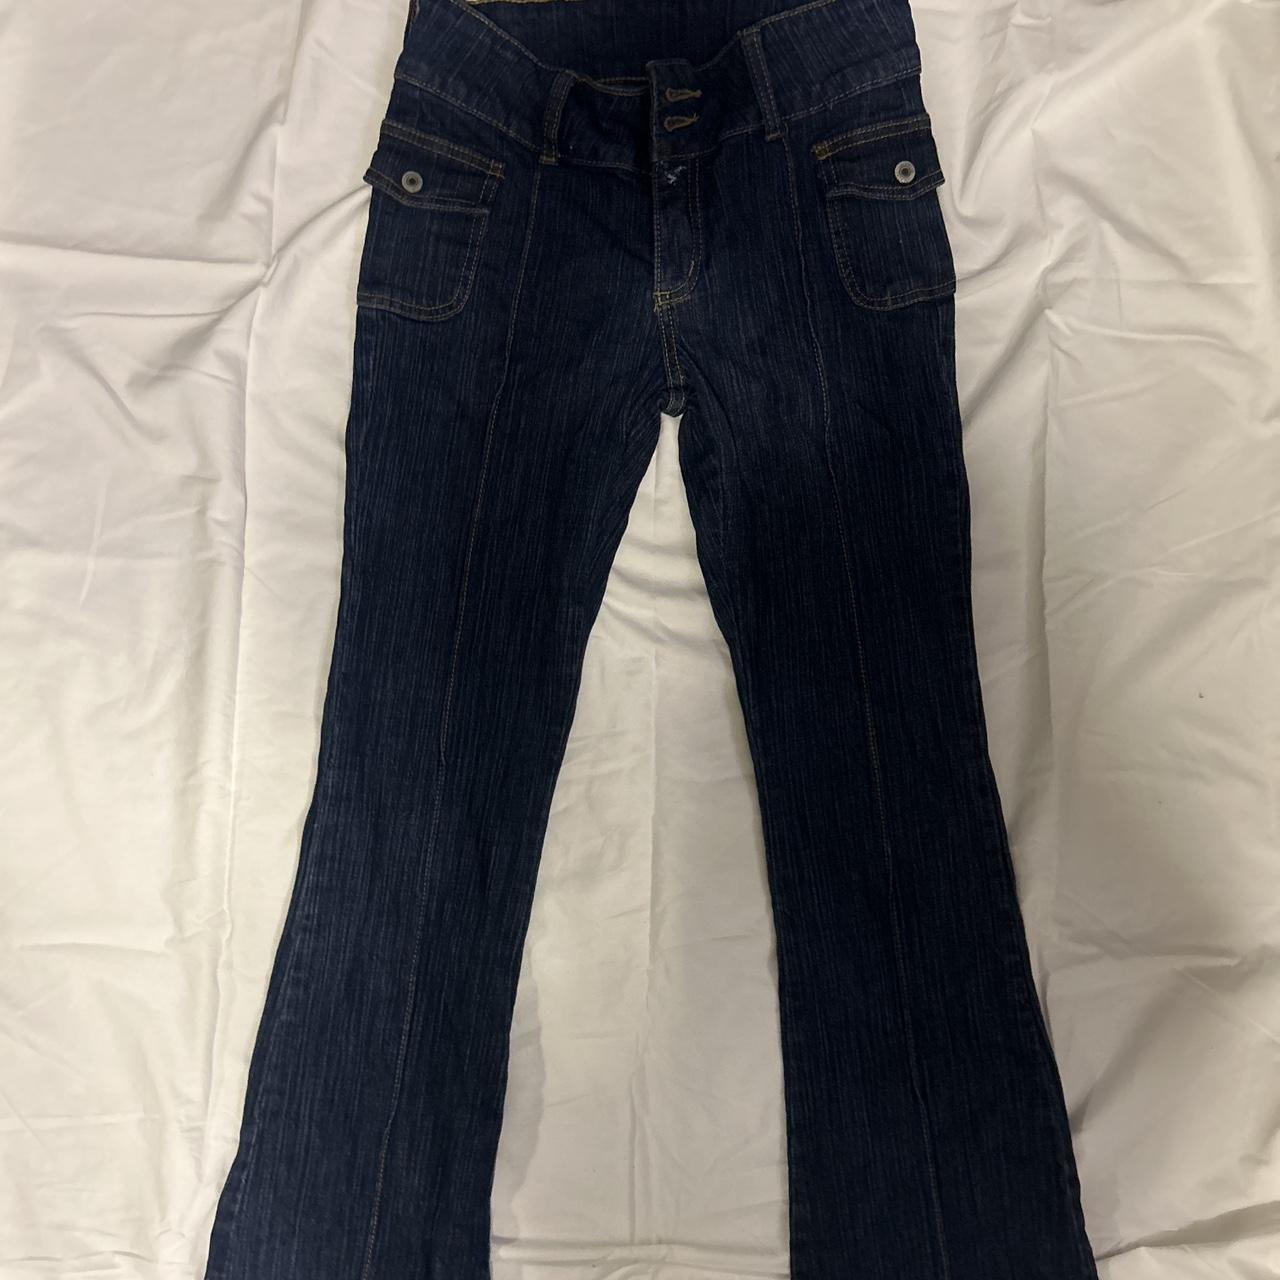 Brandy Melville Agatha denim jeans flared - Depop